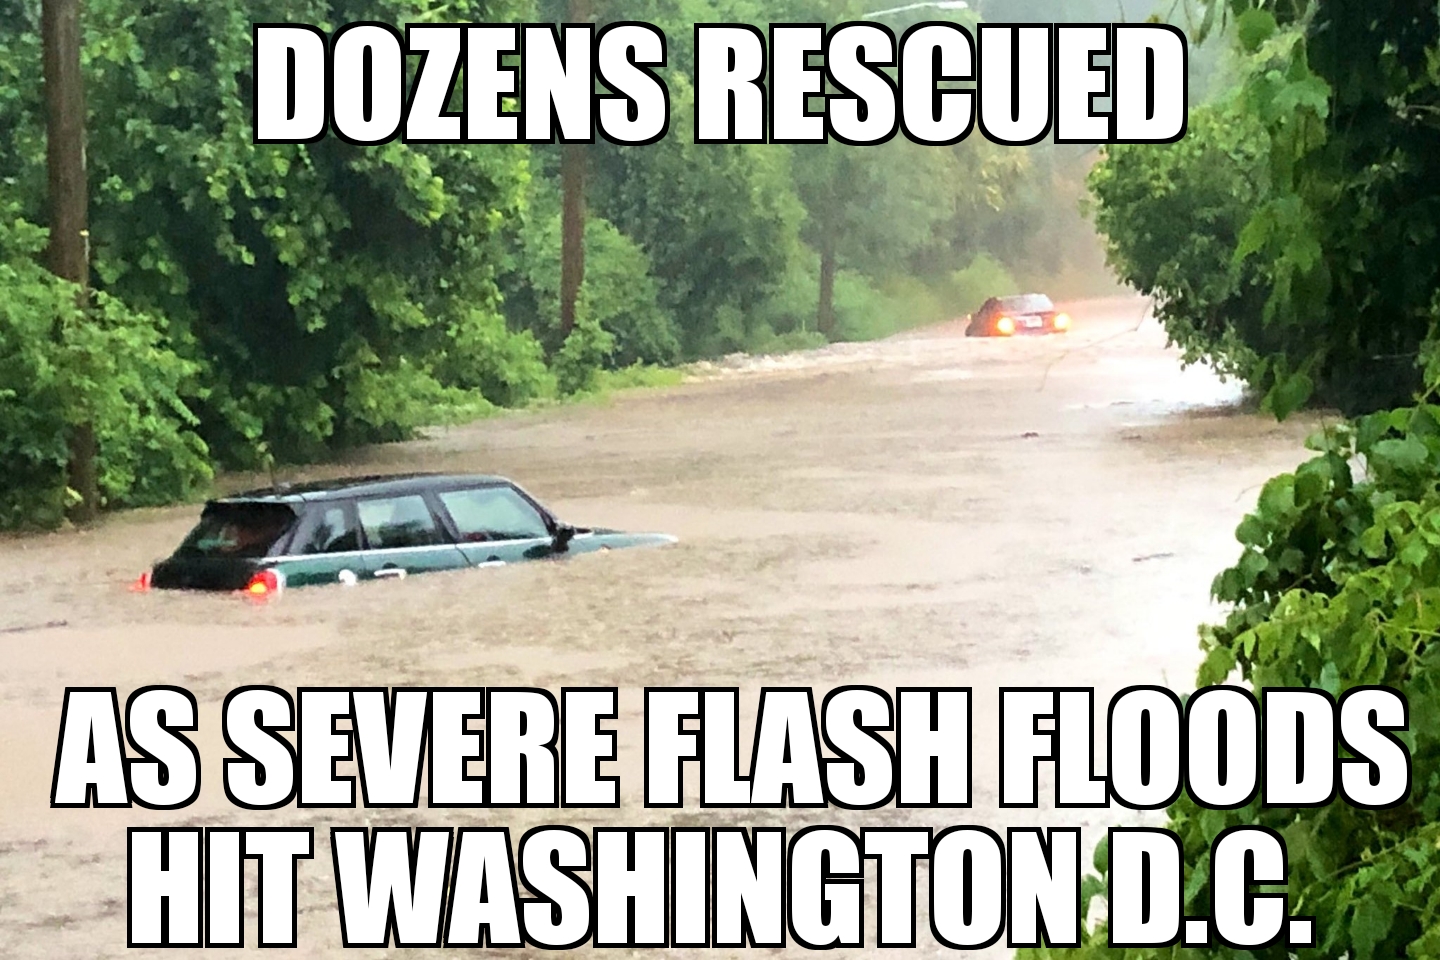 Flash floods hit Washington D.C.